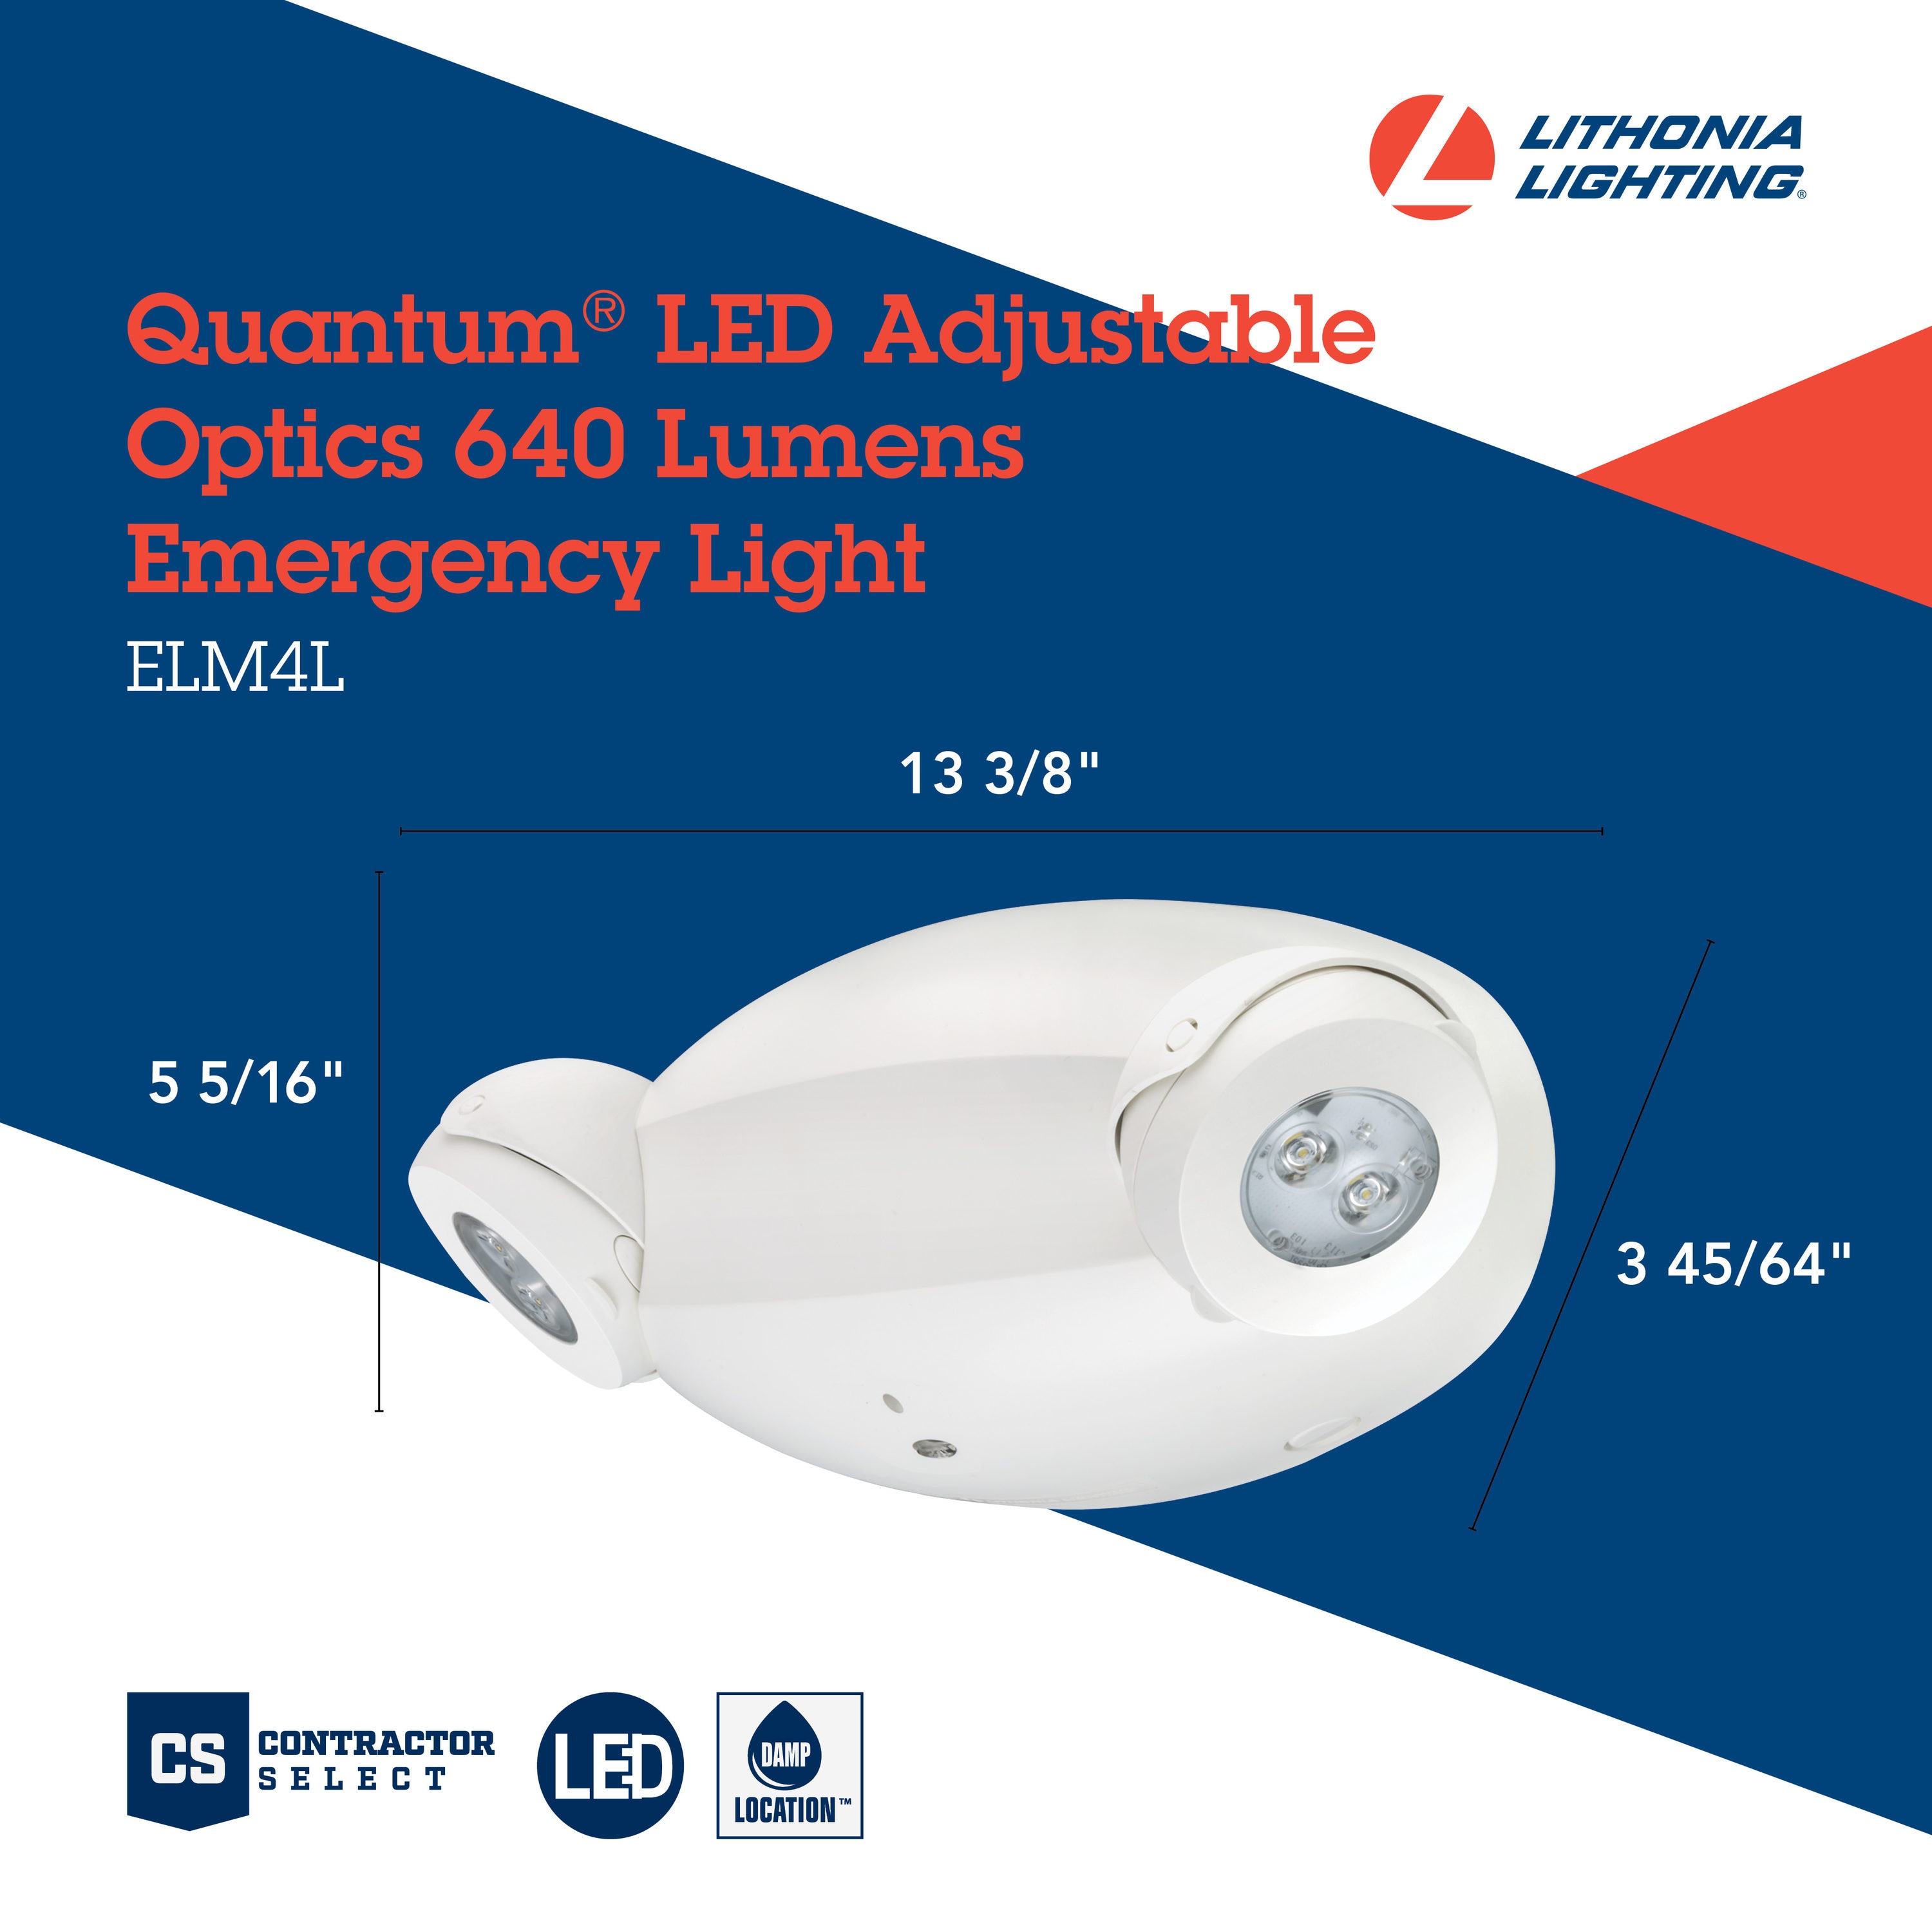 LITHONIA LIGHTING LV S W 1 R 120/277 ACUITY LITHONIA Cast Aluminum